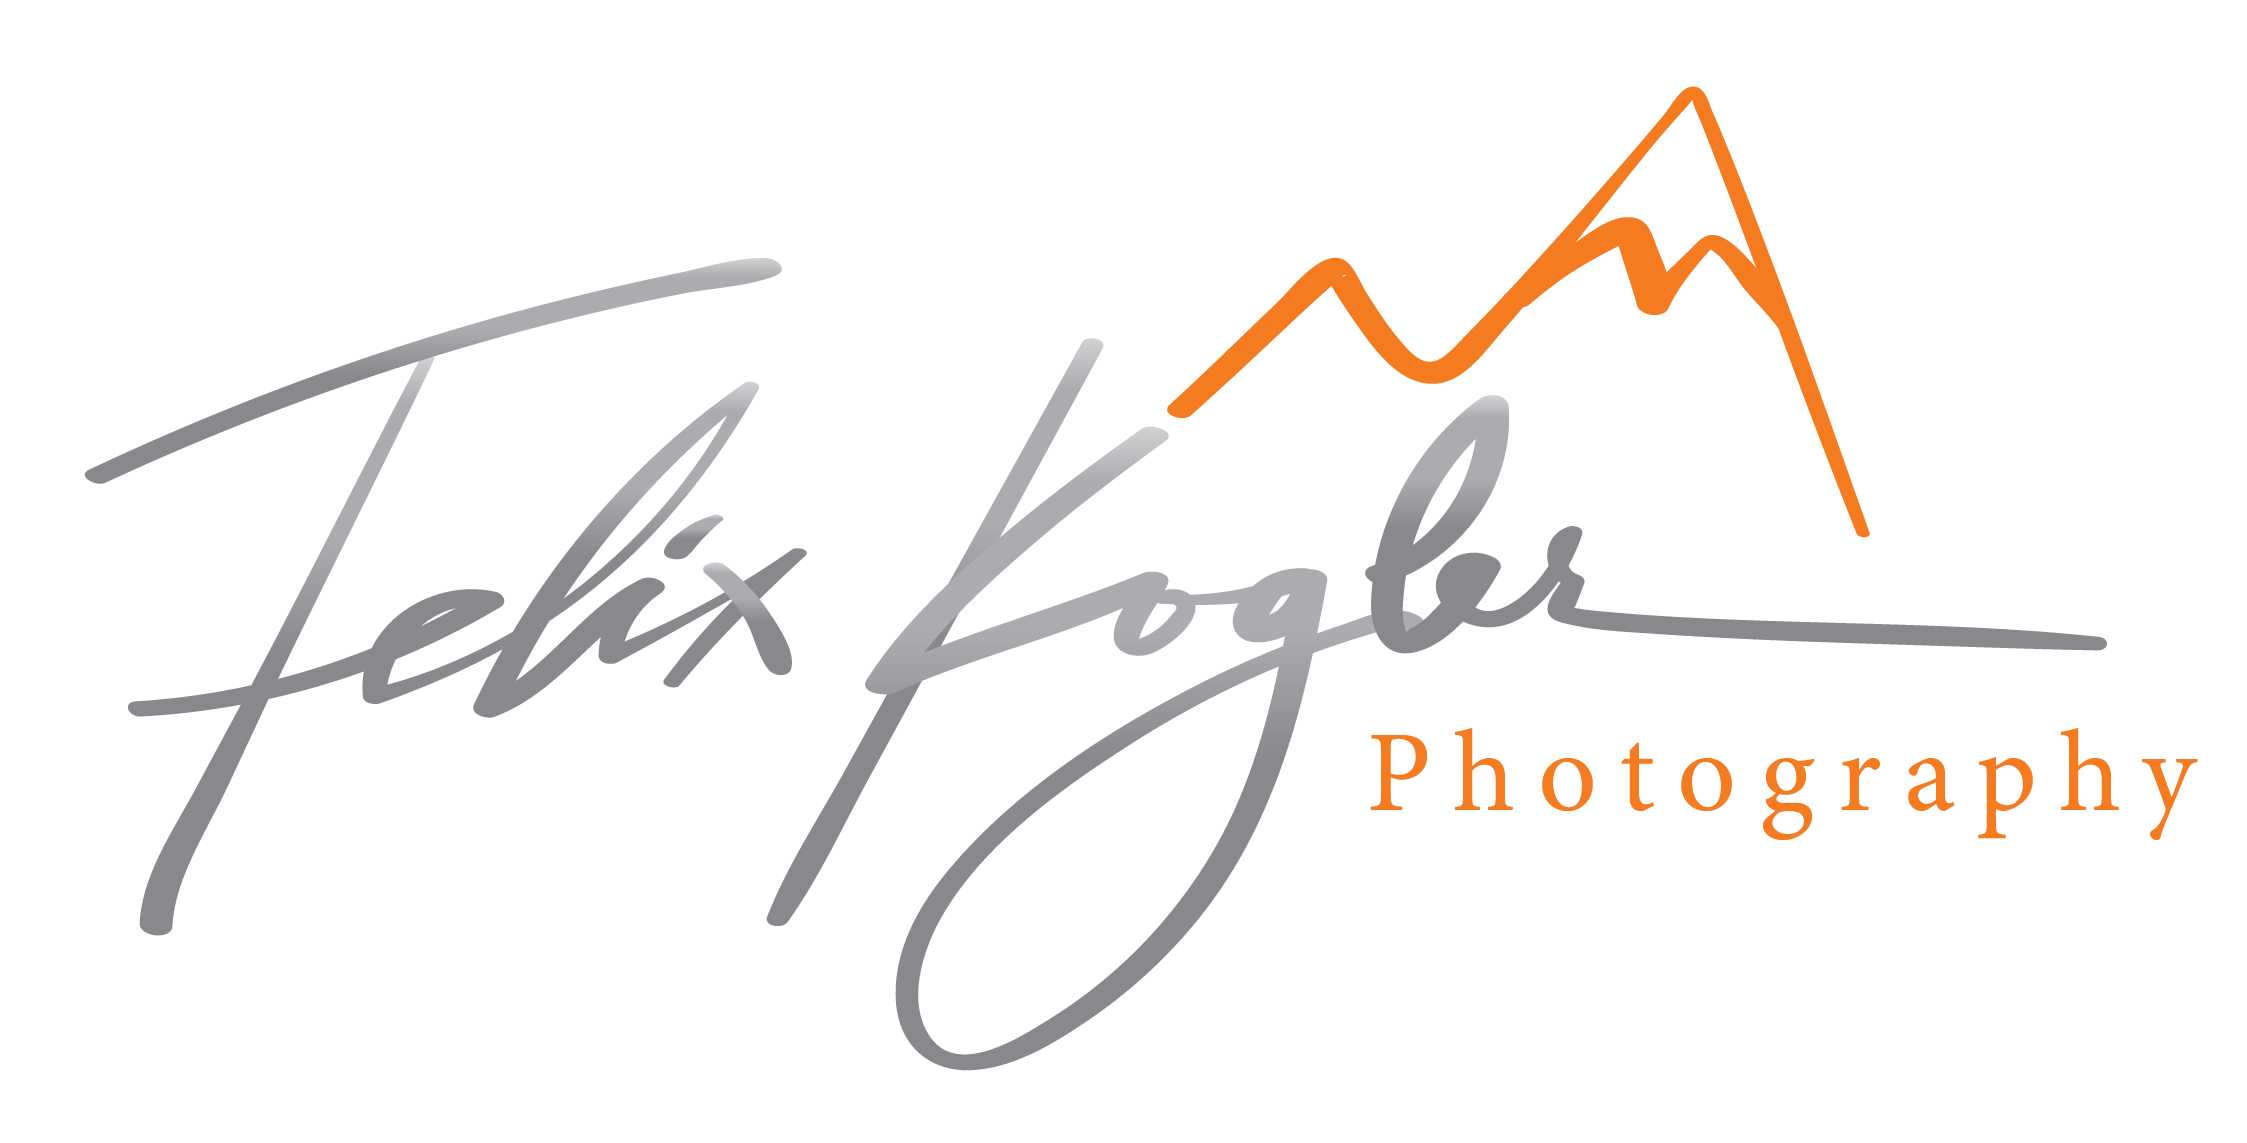 Felix Kogler Photography